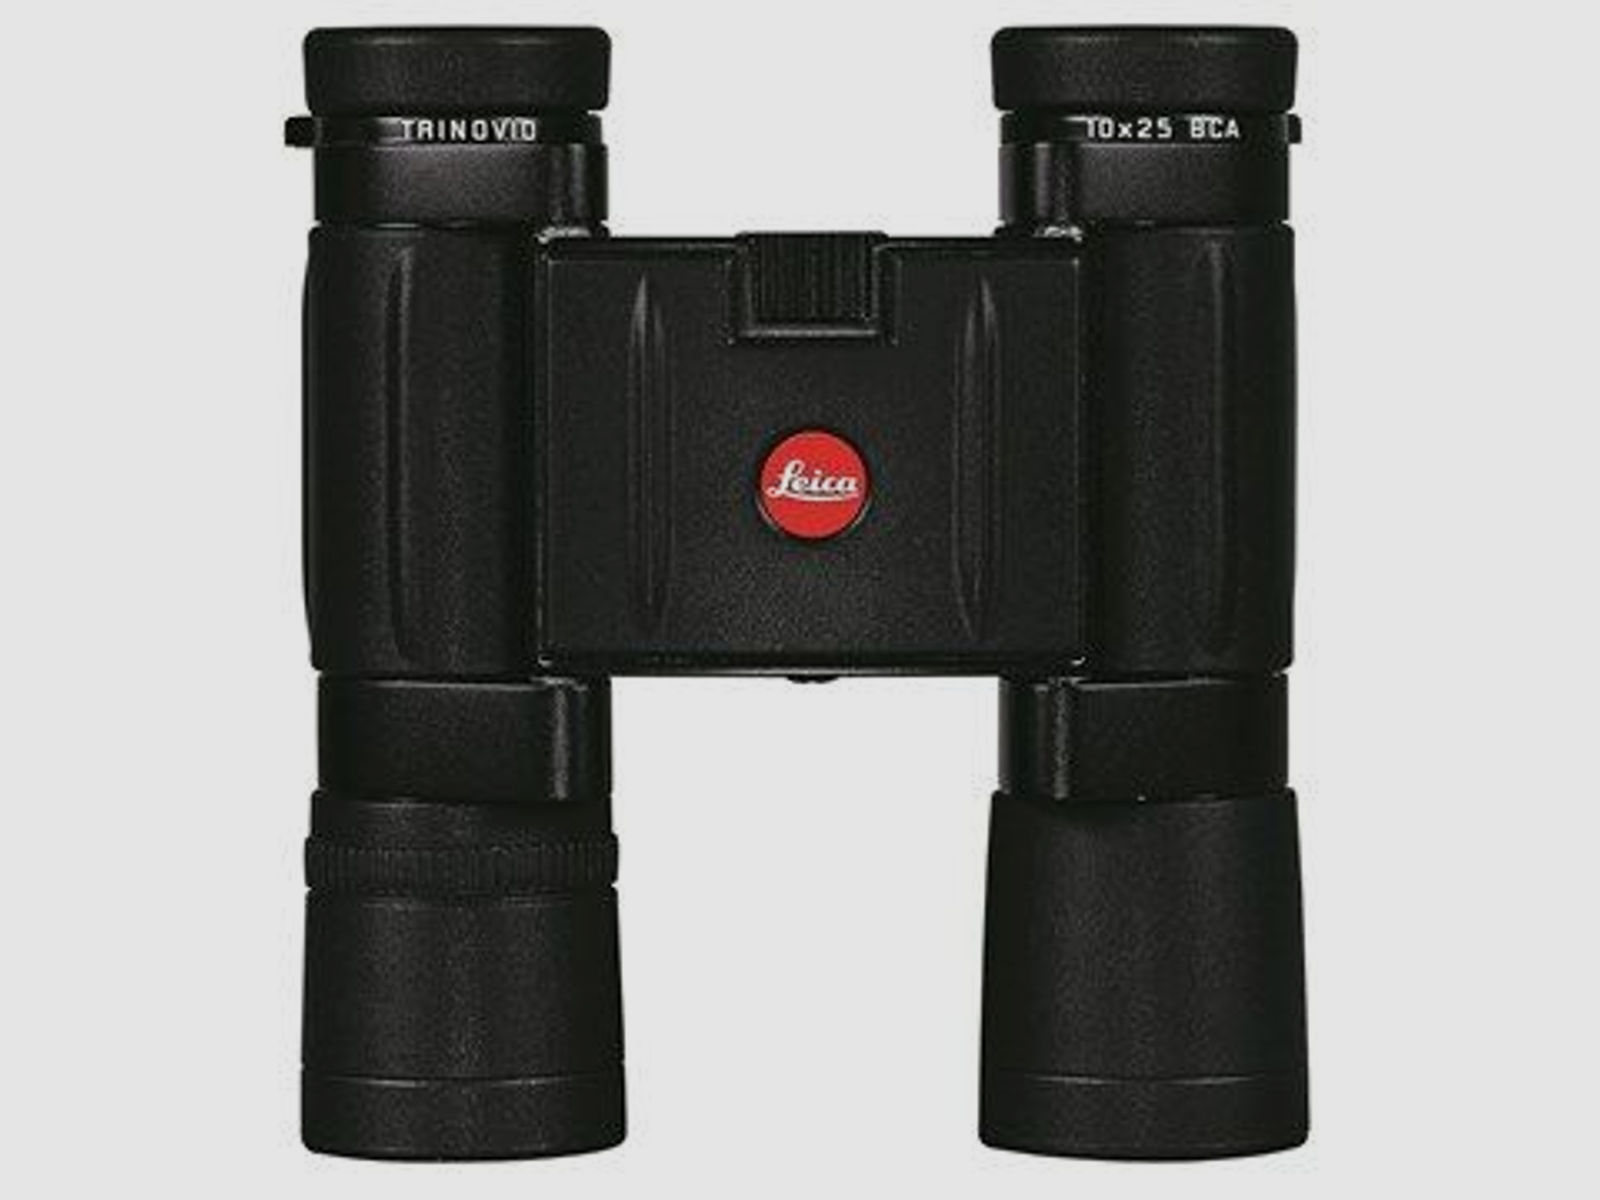 Leica Trinovid 10 x 25 BCA + Lens Cleaning Kit